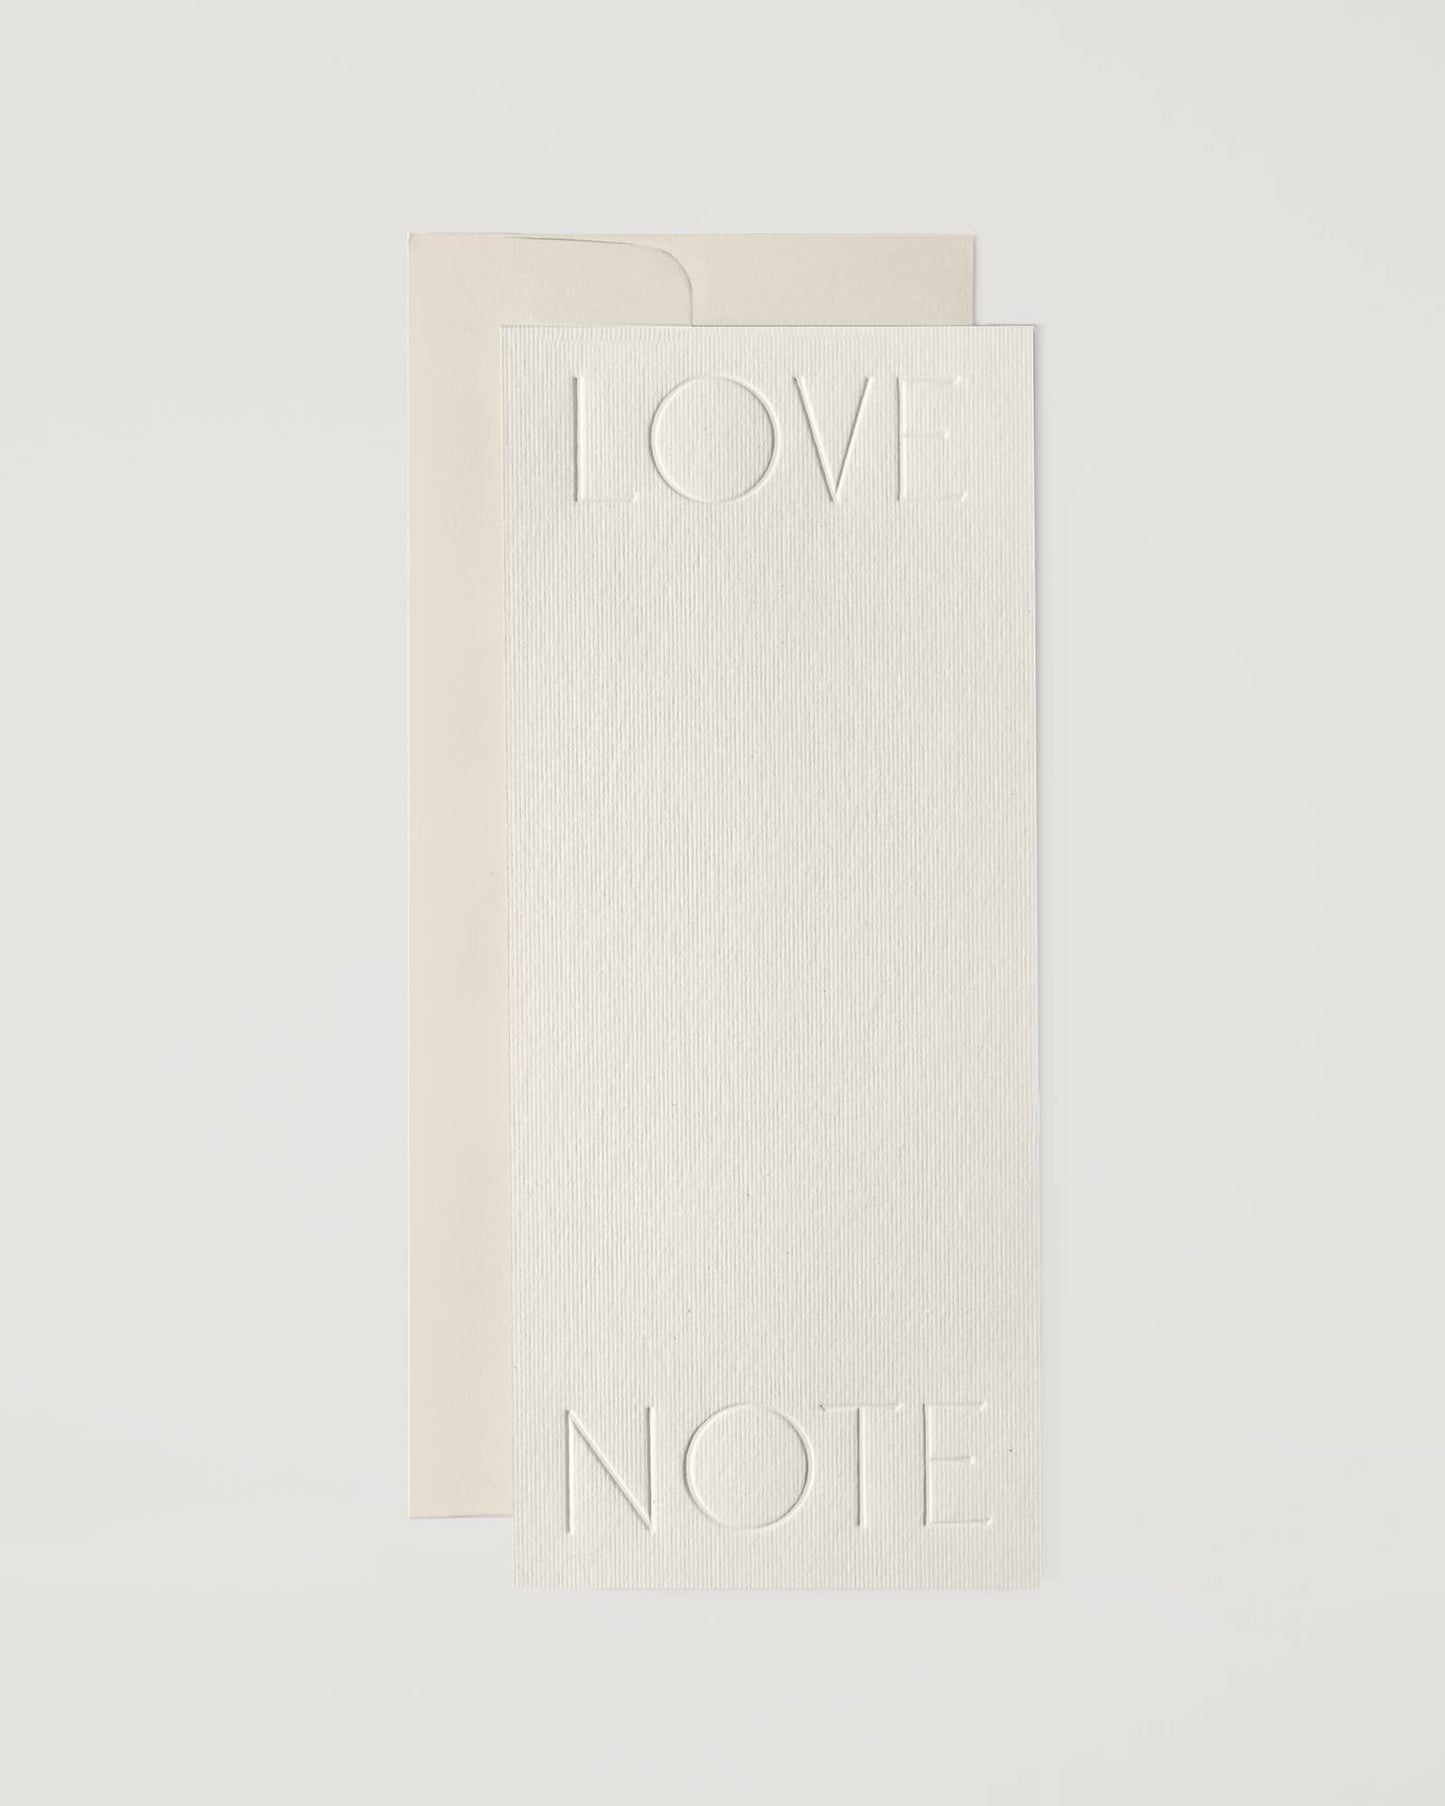 Greeting Card ~ Love Note (Embossed)